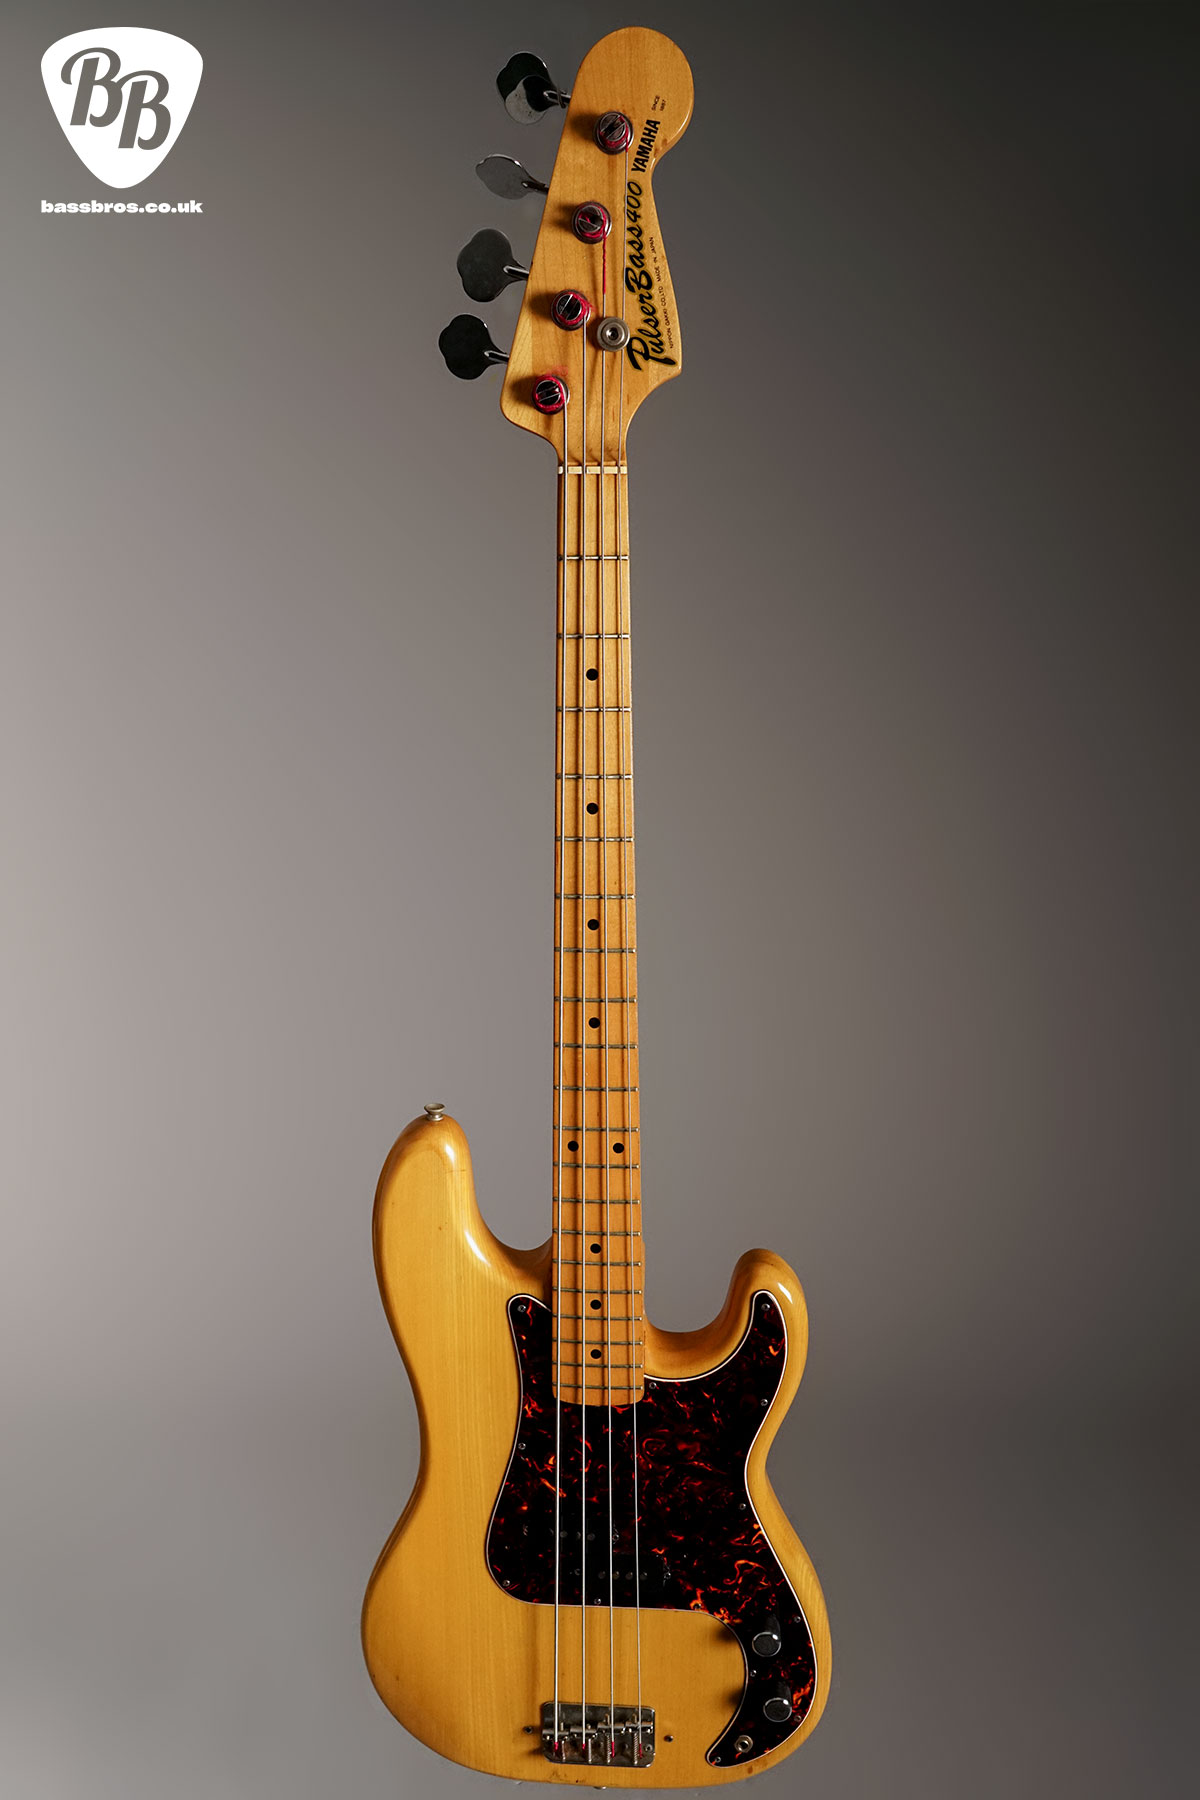 1980 Yamaha Pulser Bass PB400 | BassBros